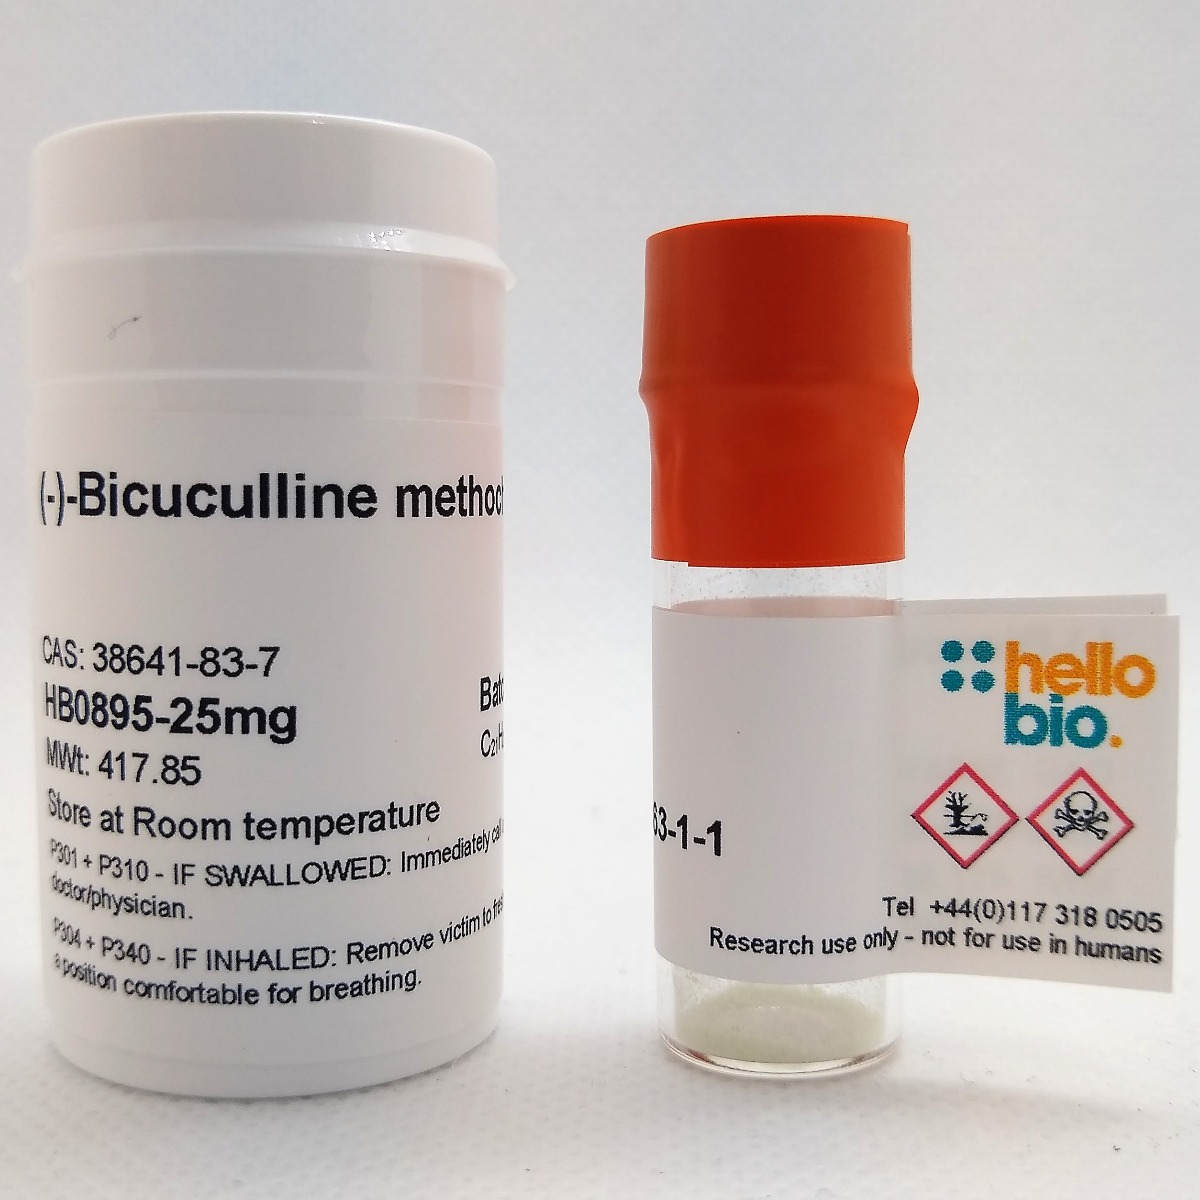 (-)-Bicuculline methochloride product vial image | Hello Bio